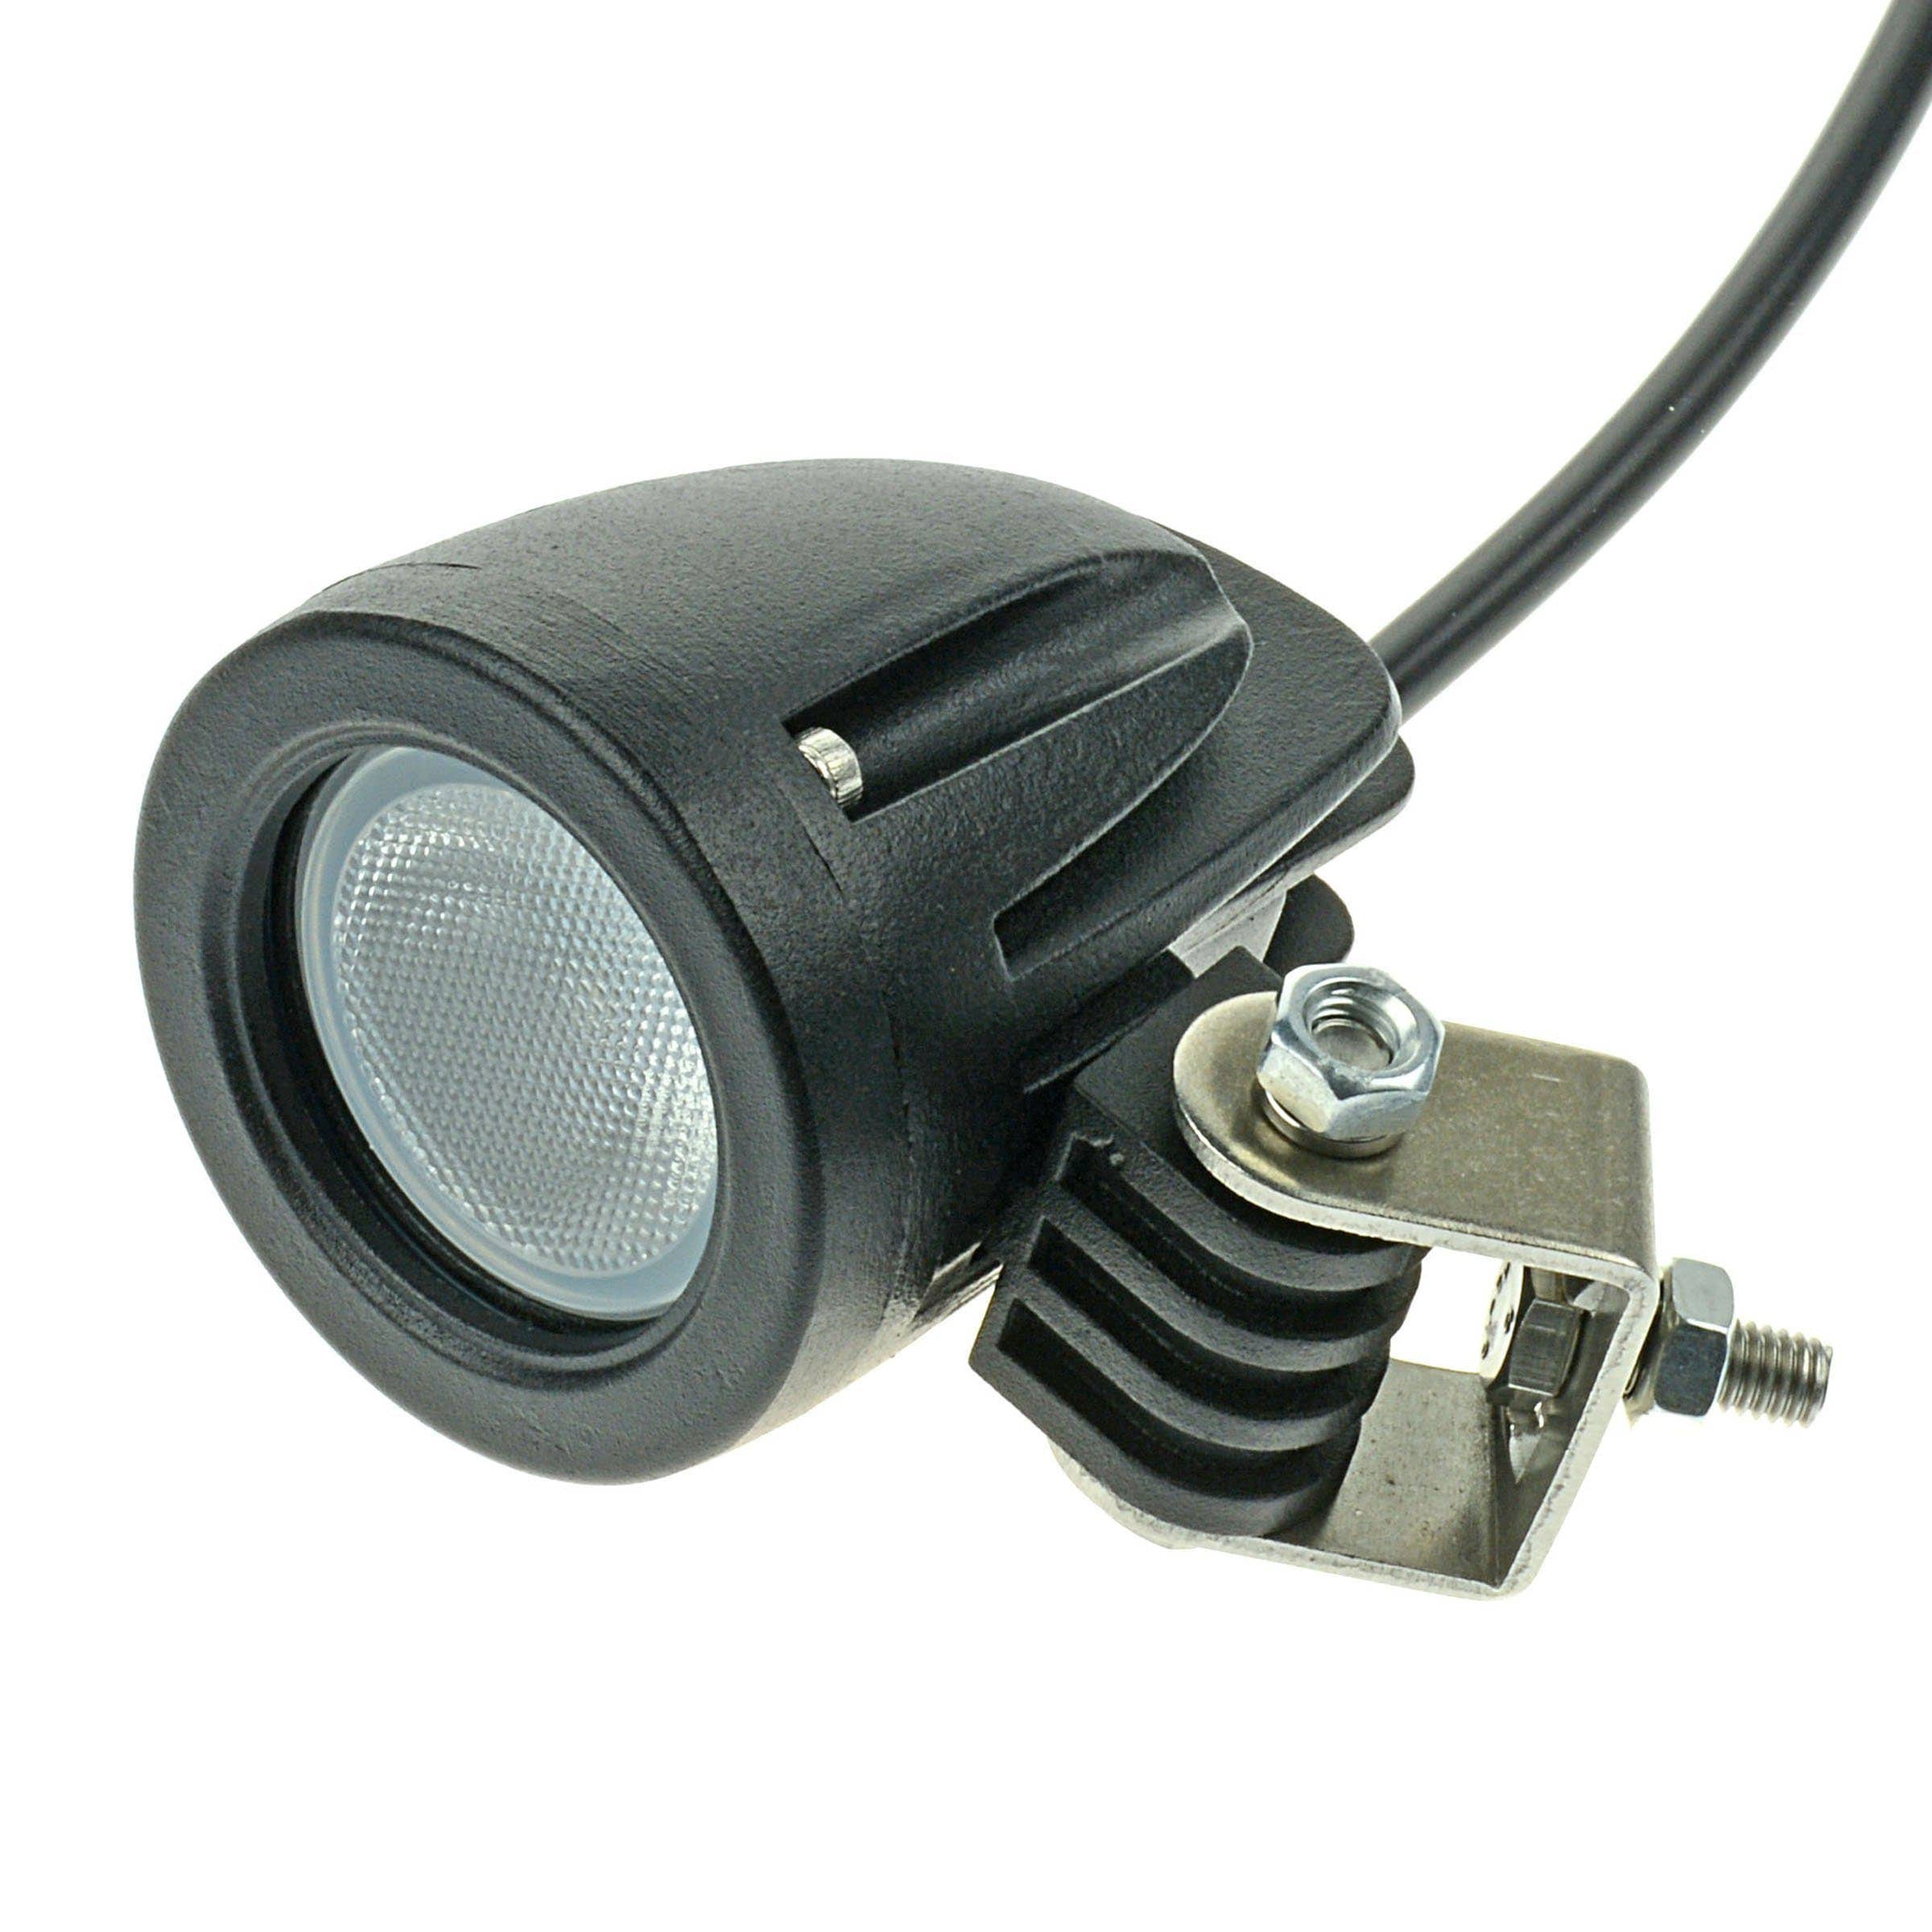 LANE BLASTER LED Trolling Motor Headlight - T-H Marine Supplies